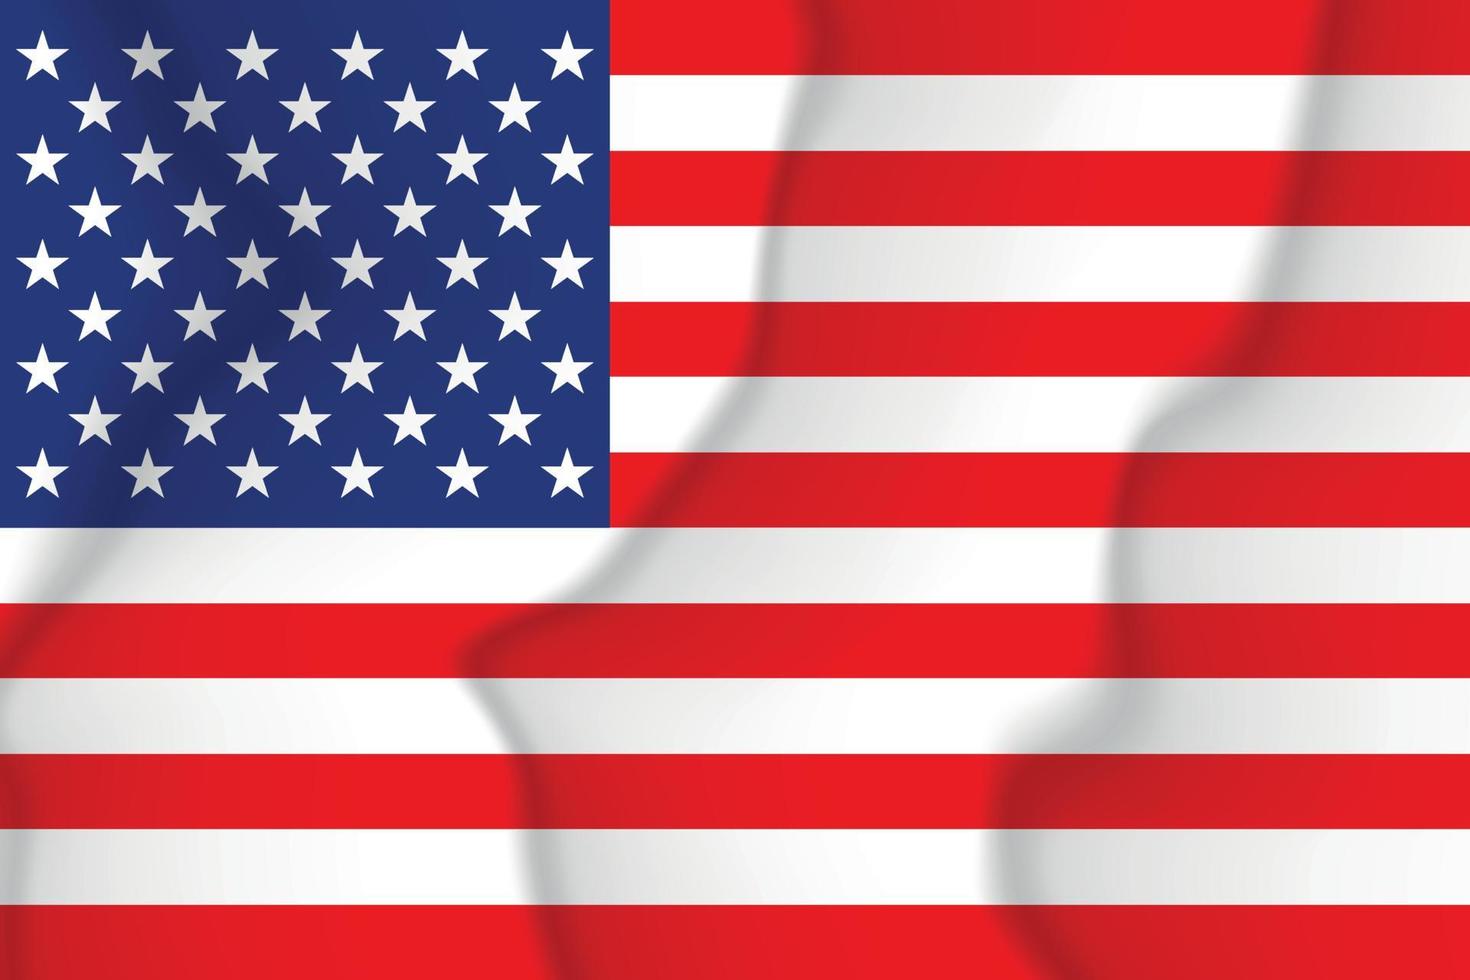 National flag of USA. Silk flag. Vector illustration in EPS 10 format